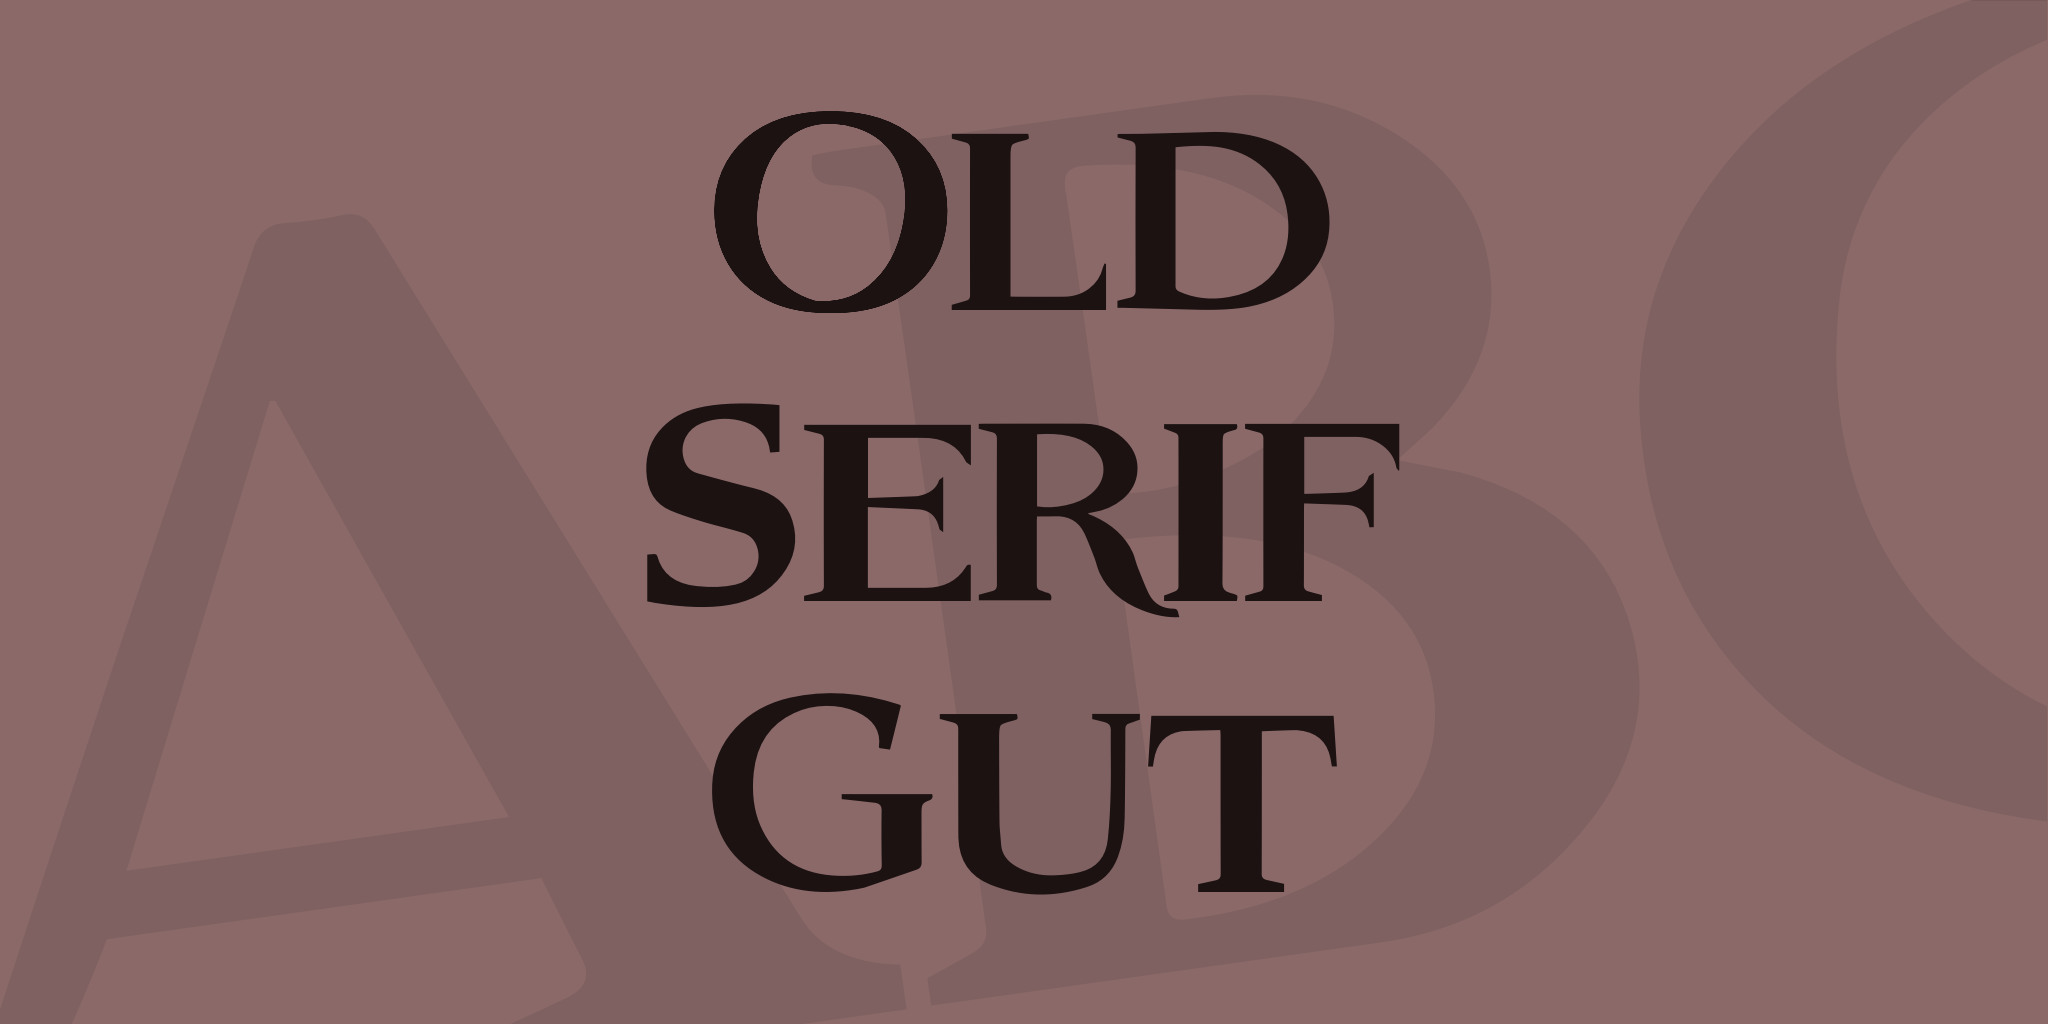 Old Serif Gut